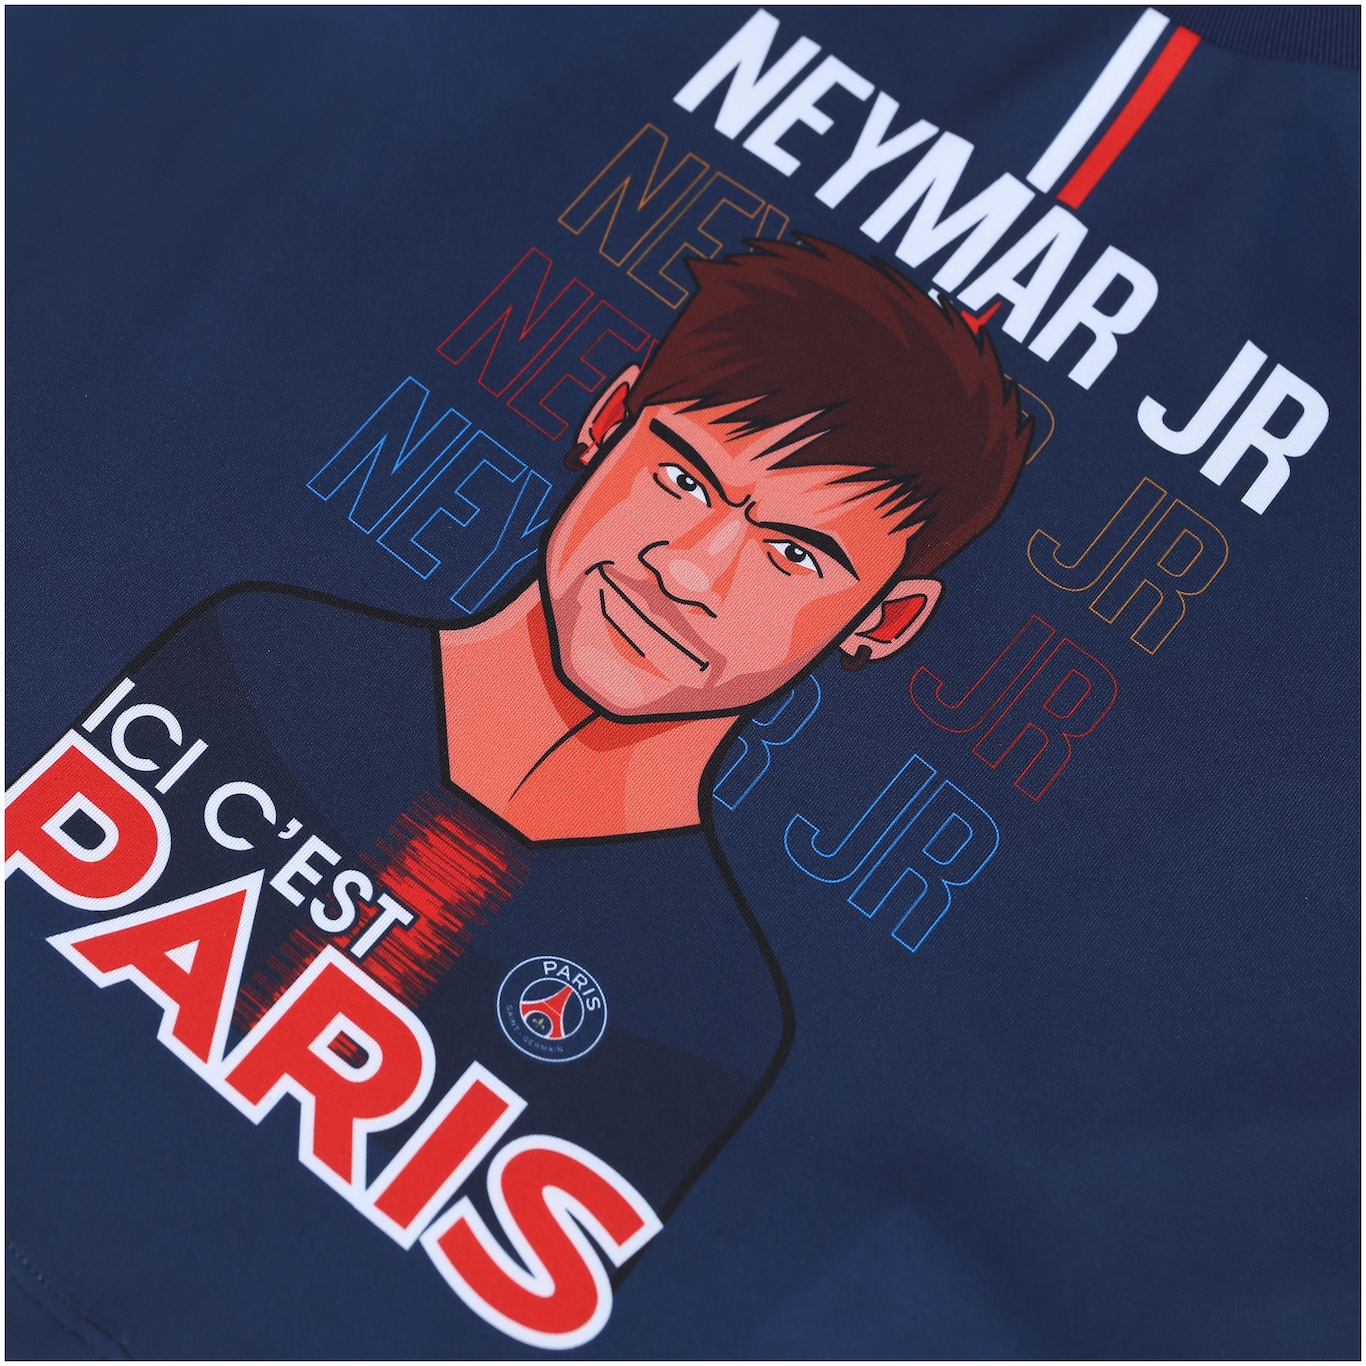 Camisa Infantil Psg Neymar